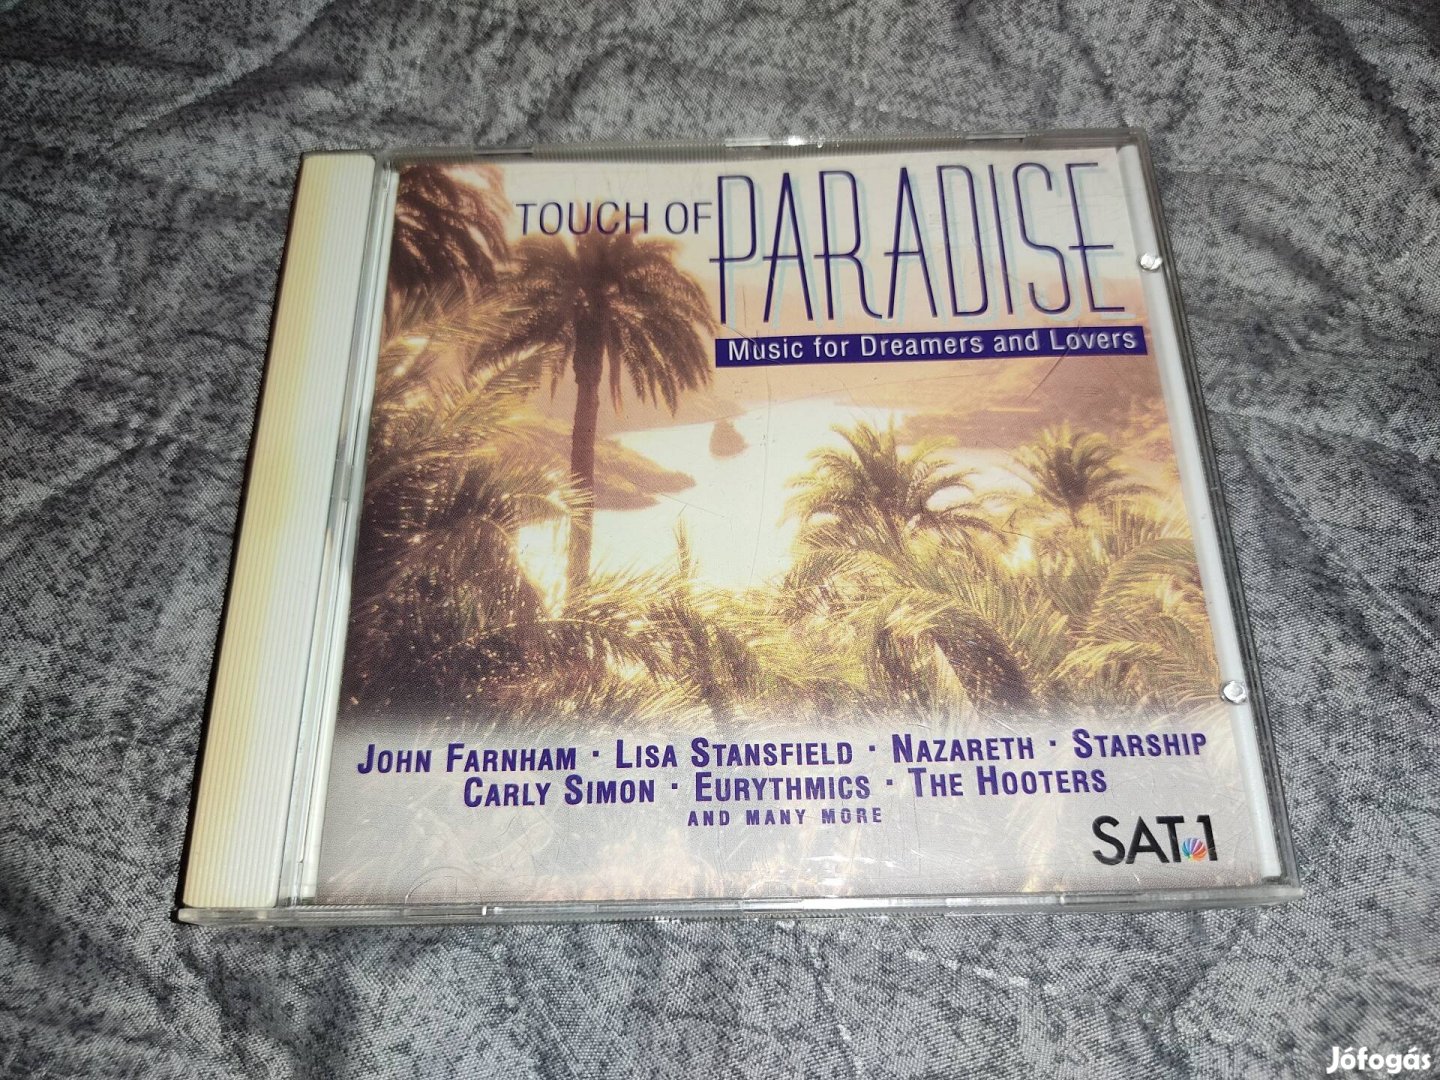 Touch Of Paradise CD (Eric Carmen,Starship,Rick Astley,Eurythmics)